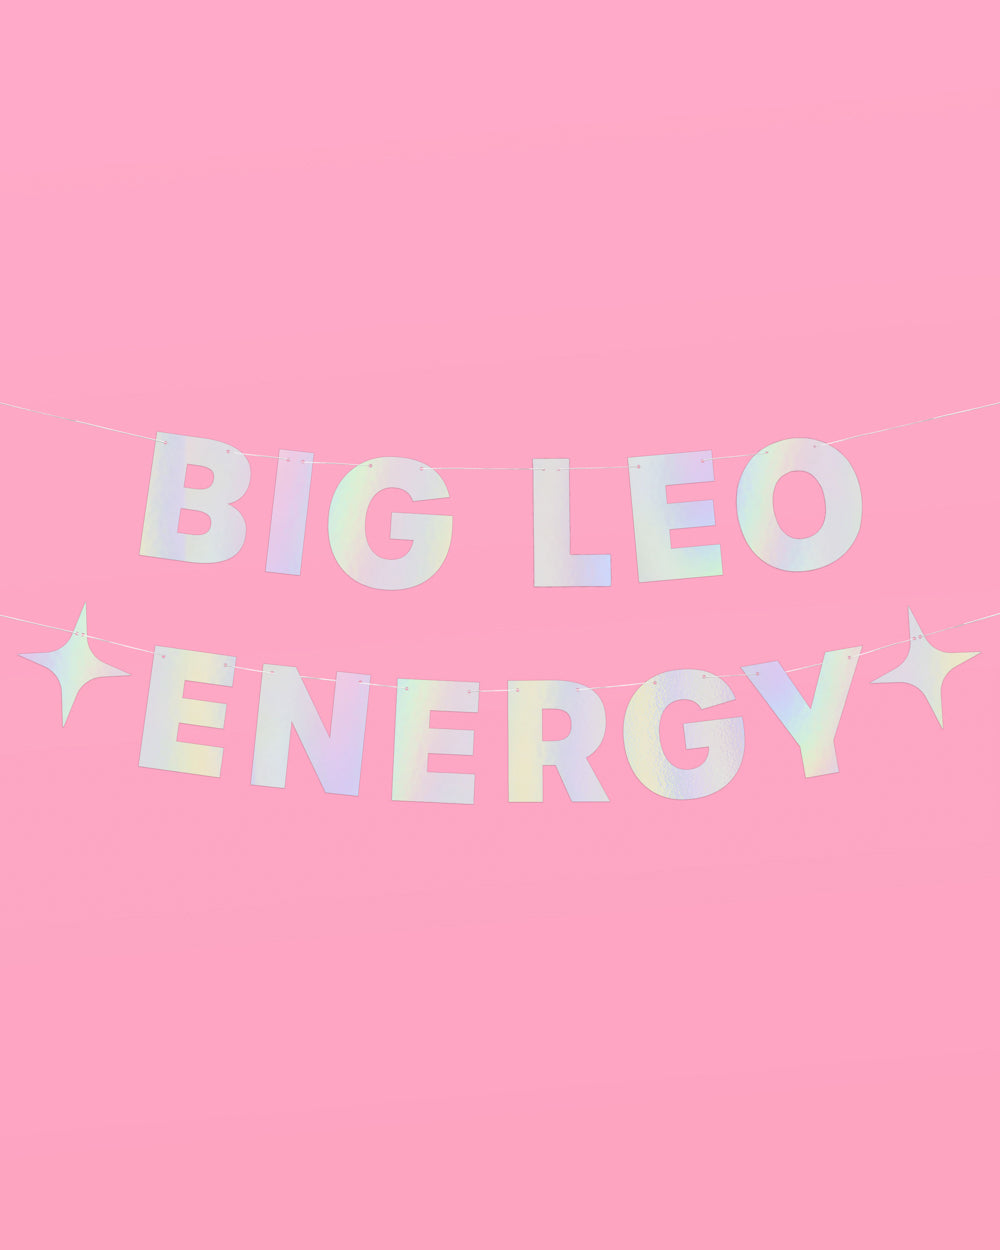 Big Leo Energy Banner - iridescent foil banner